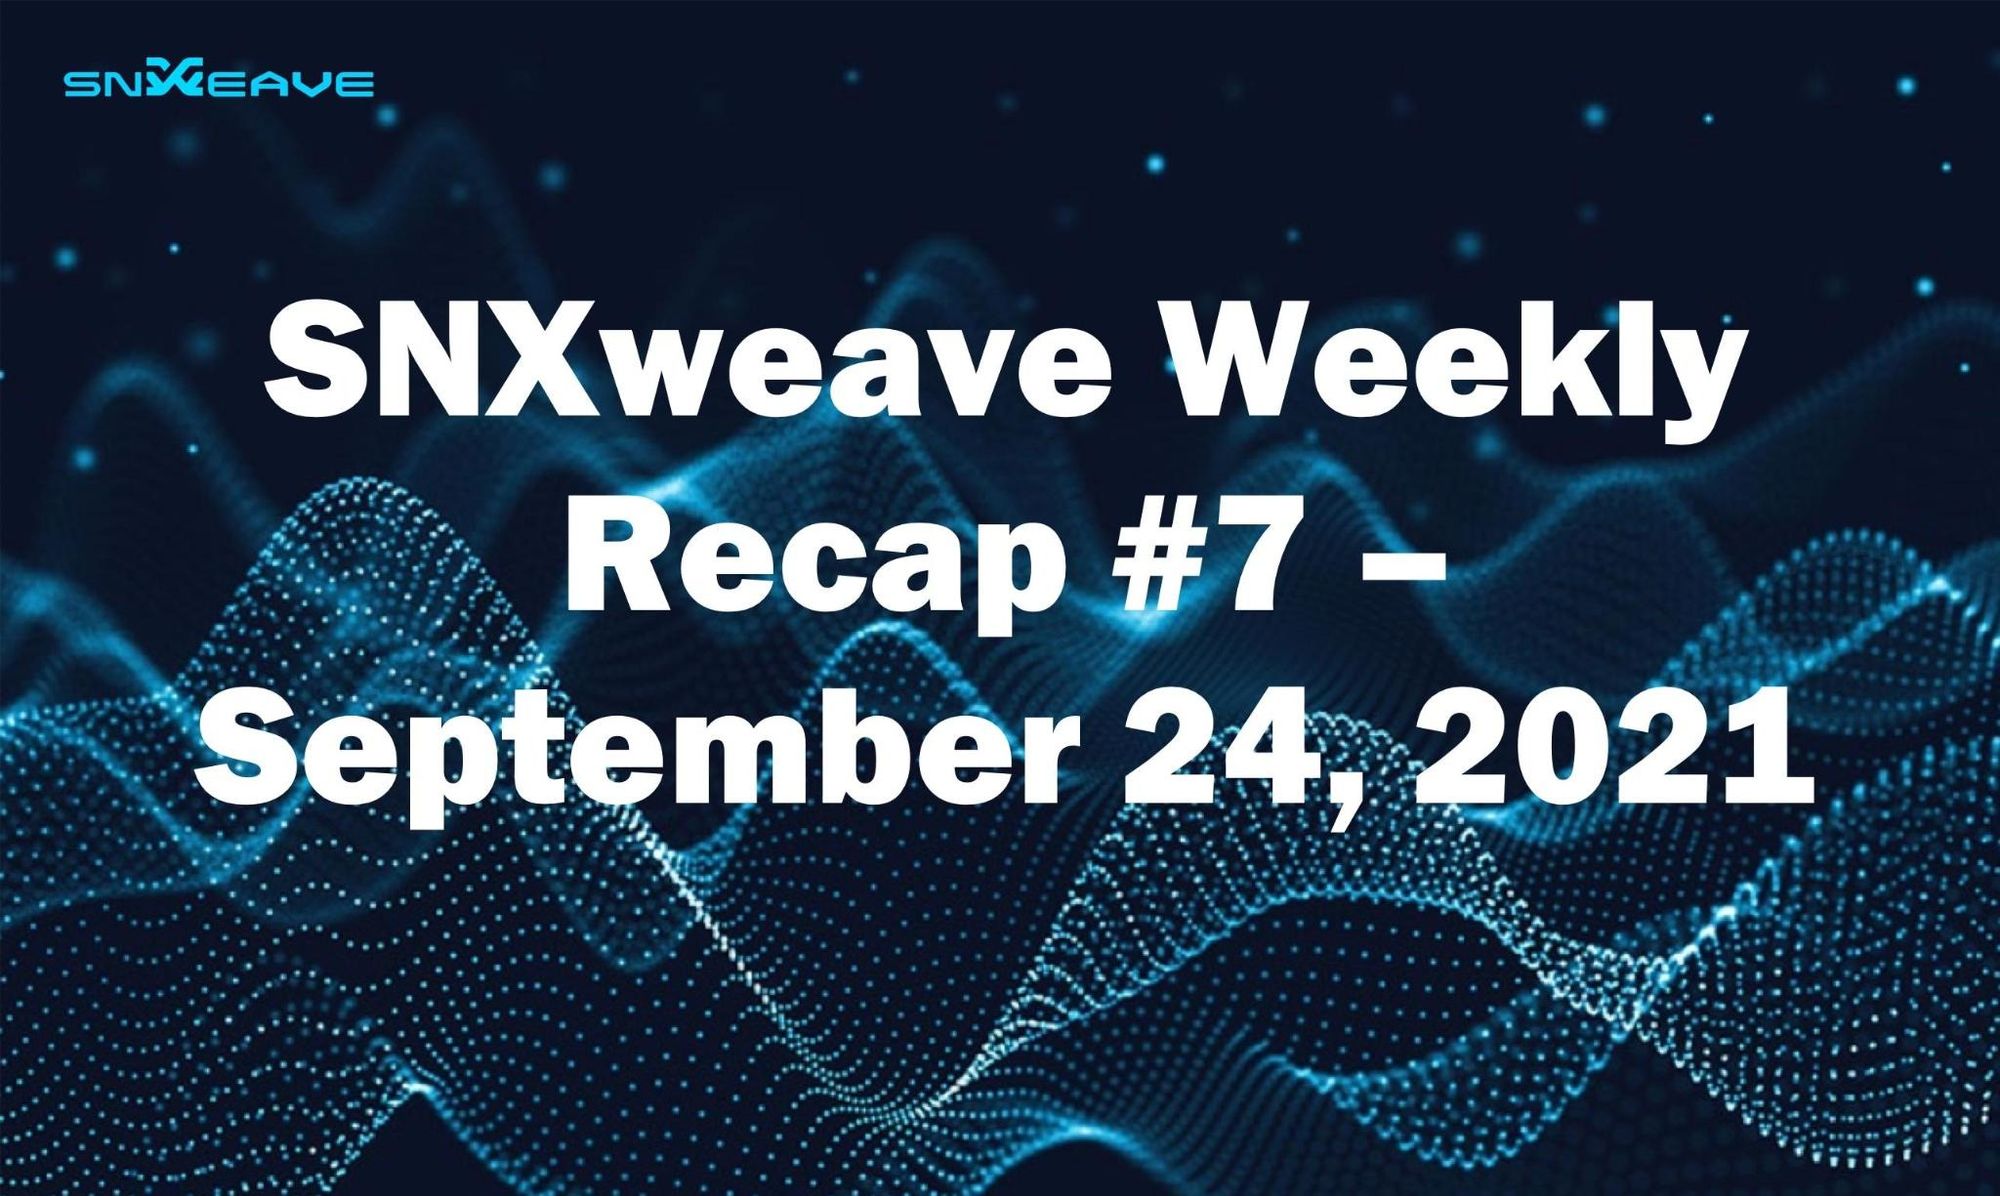 SNXweave Weekly Recap 7